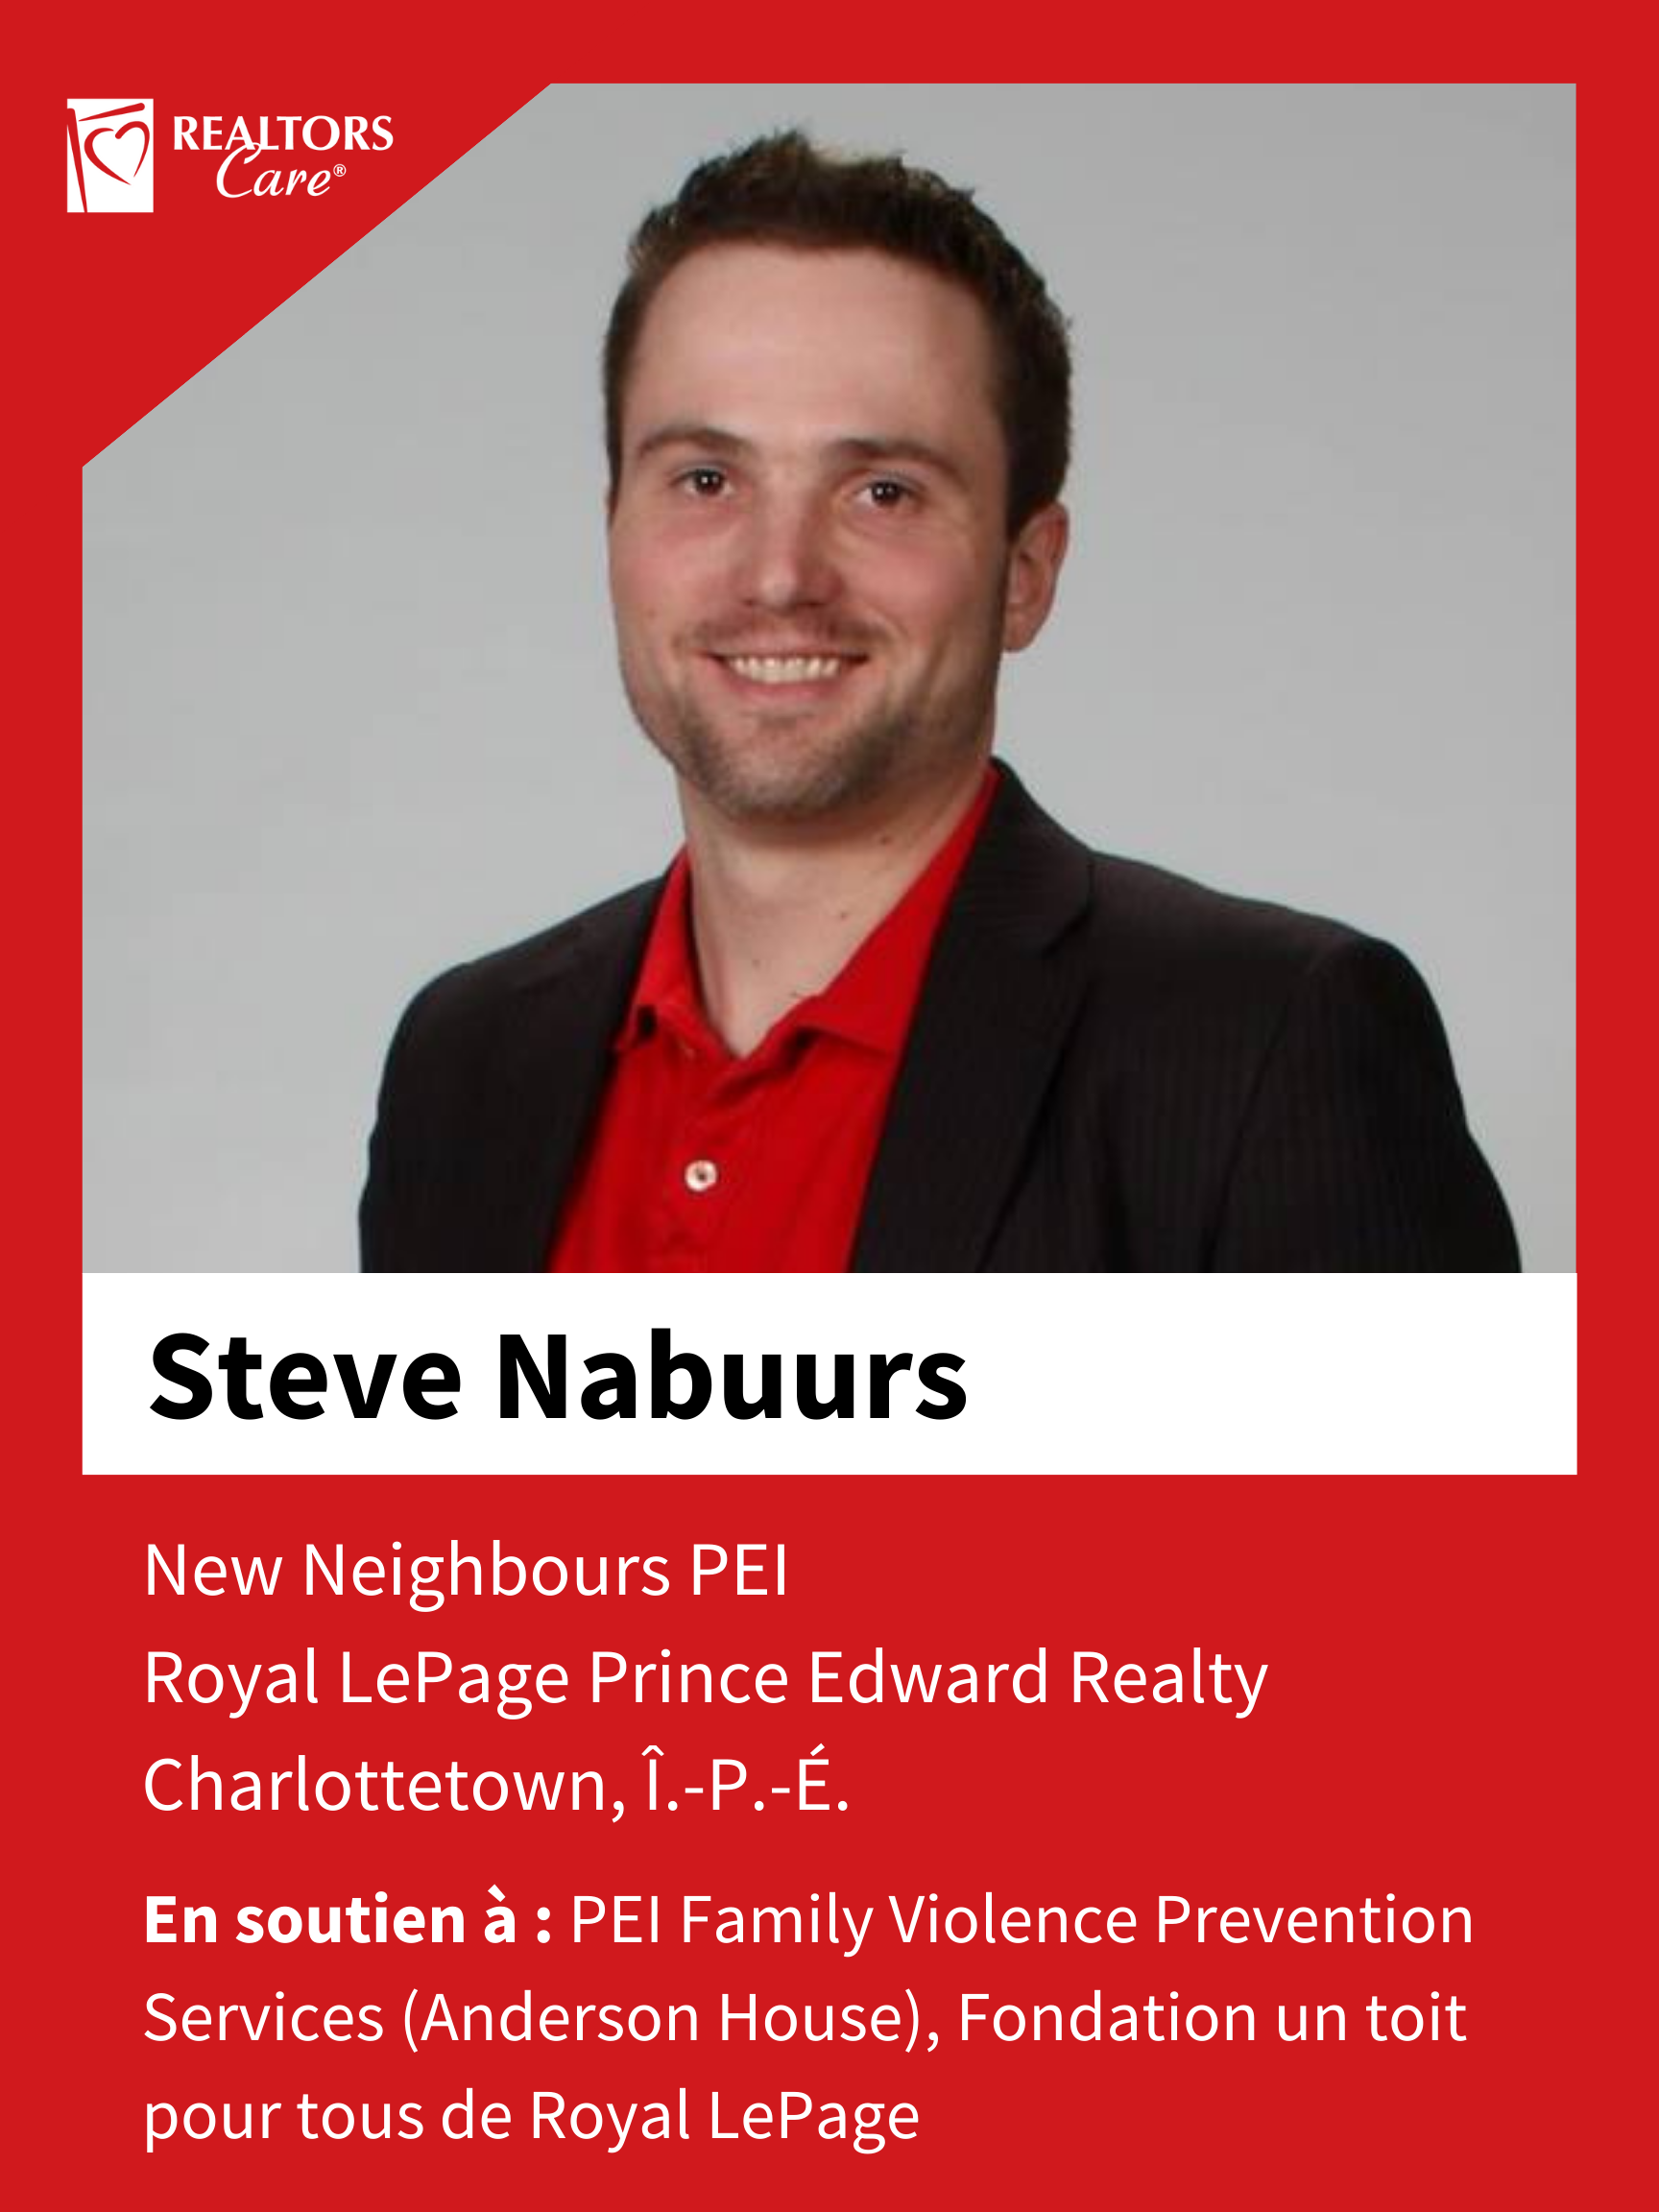 Steve Nabuurs
Charlottetown Î.-P.-É.
